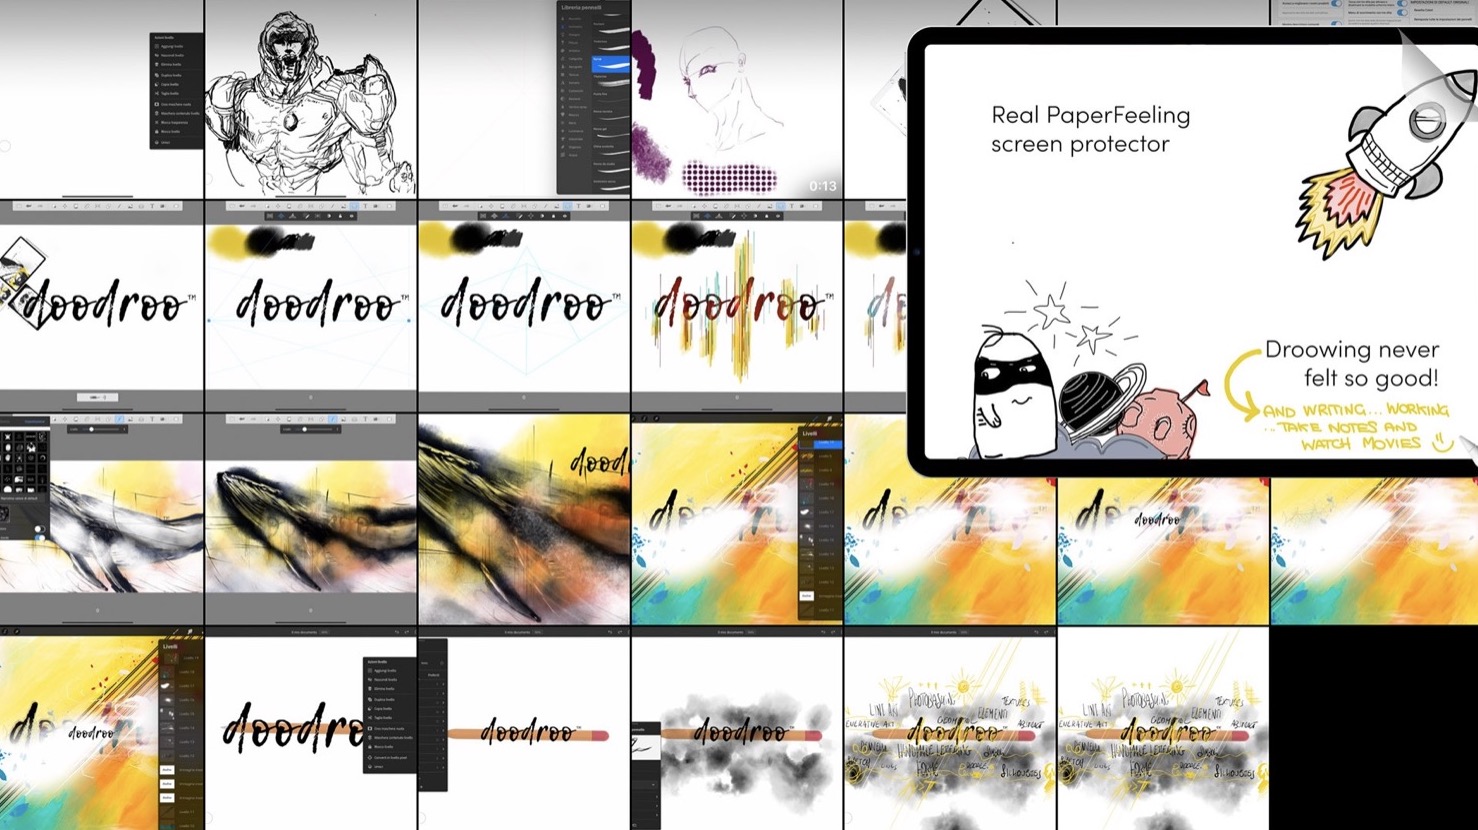 Recensione Doodroo, la pellicola per iPad e Apple Pencil vista da un artista